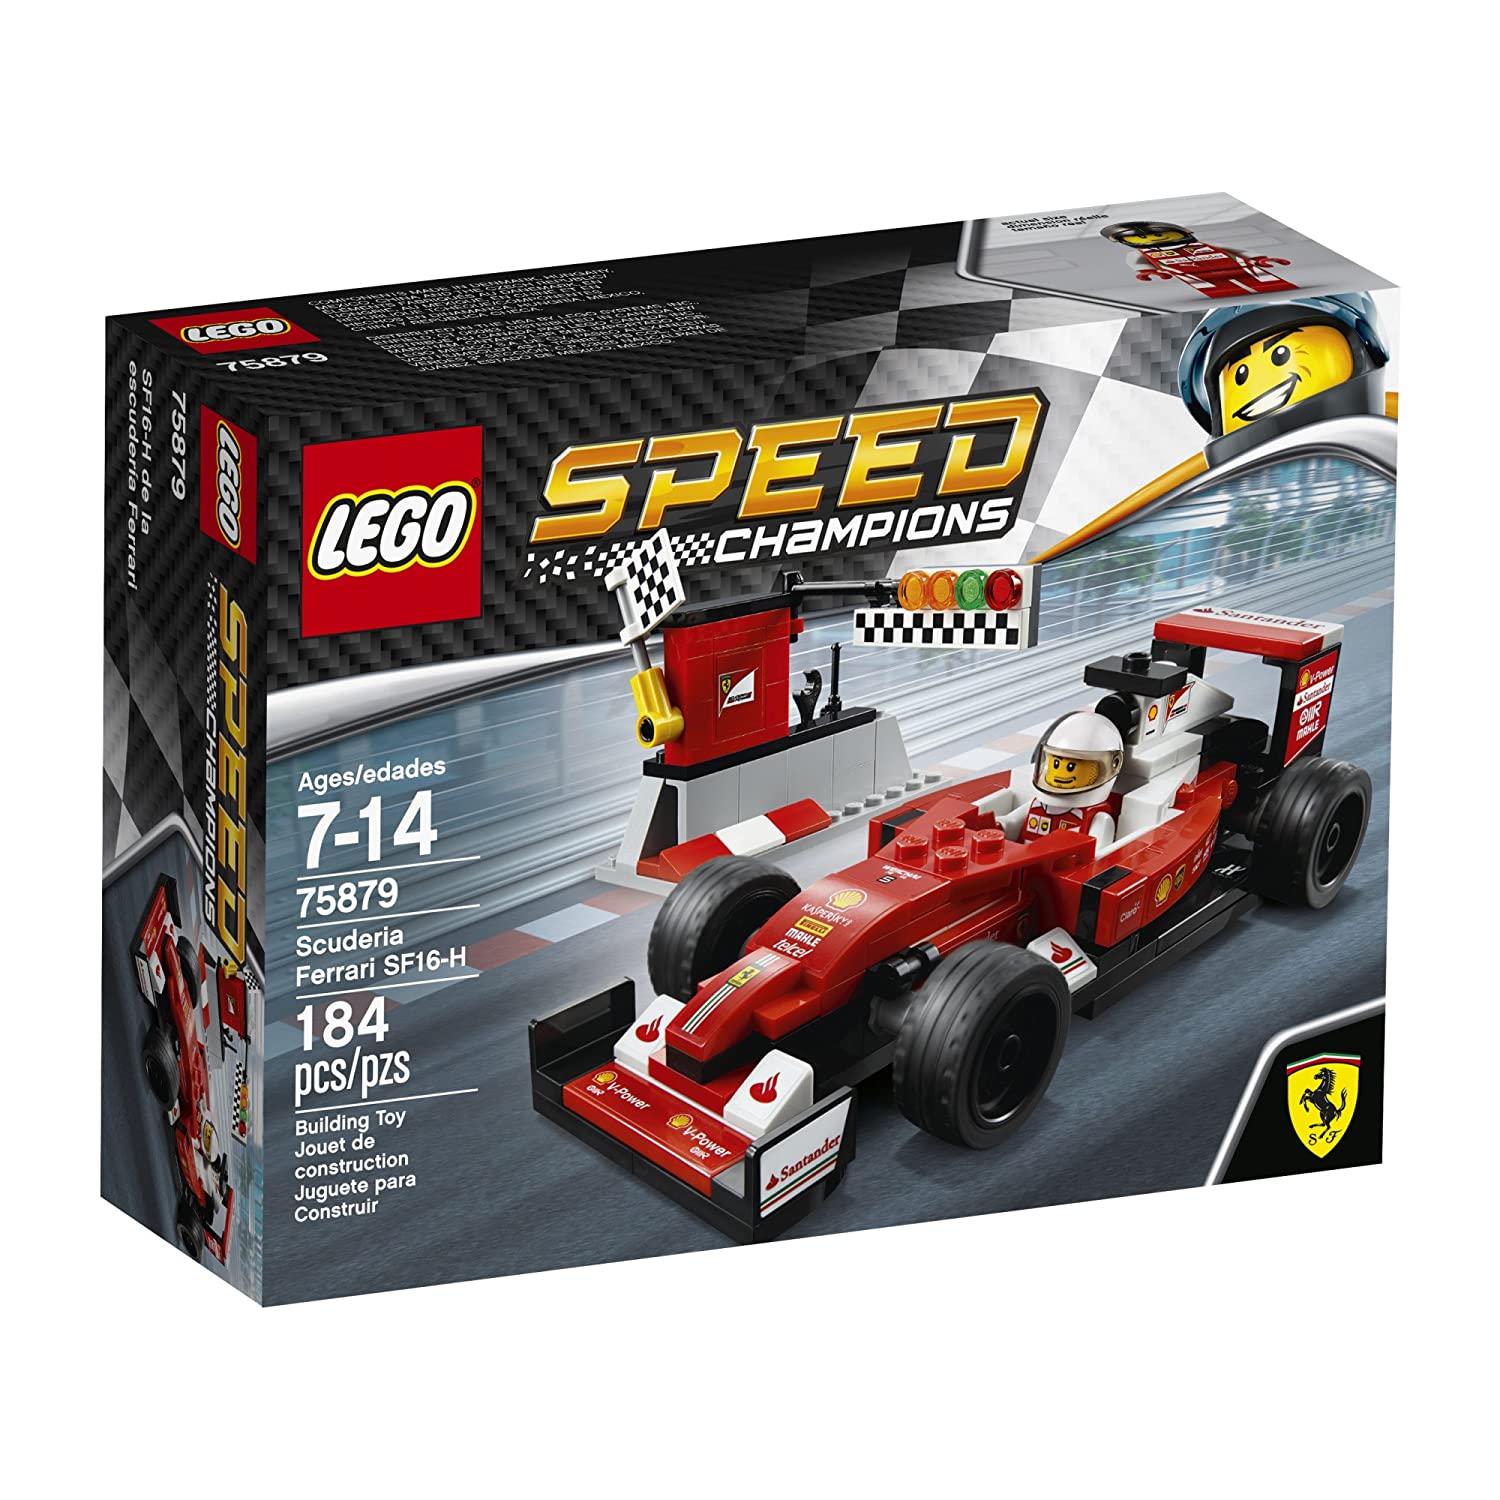 Top 9 Best LEGO Ferrari Sets Reviews in 2022 8